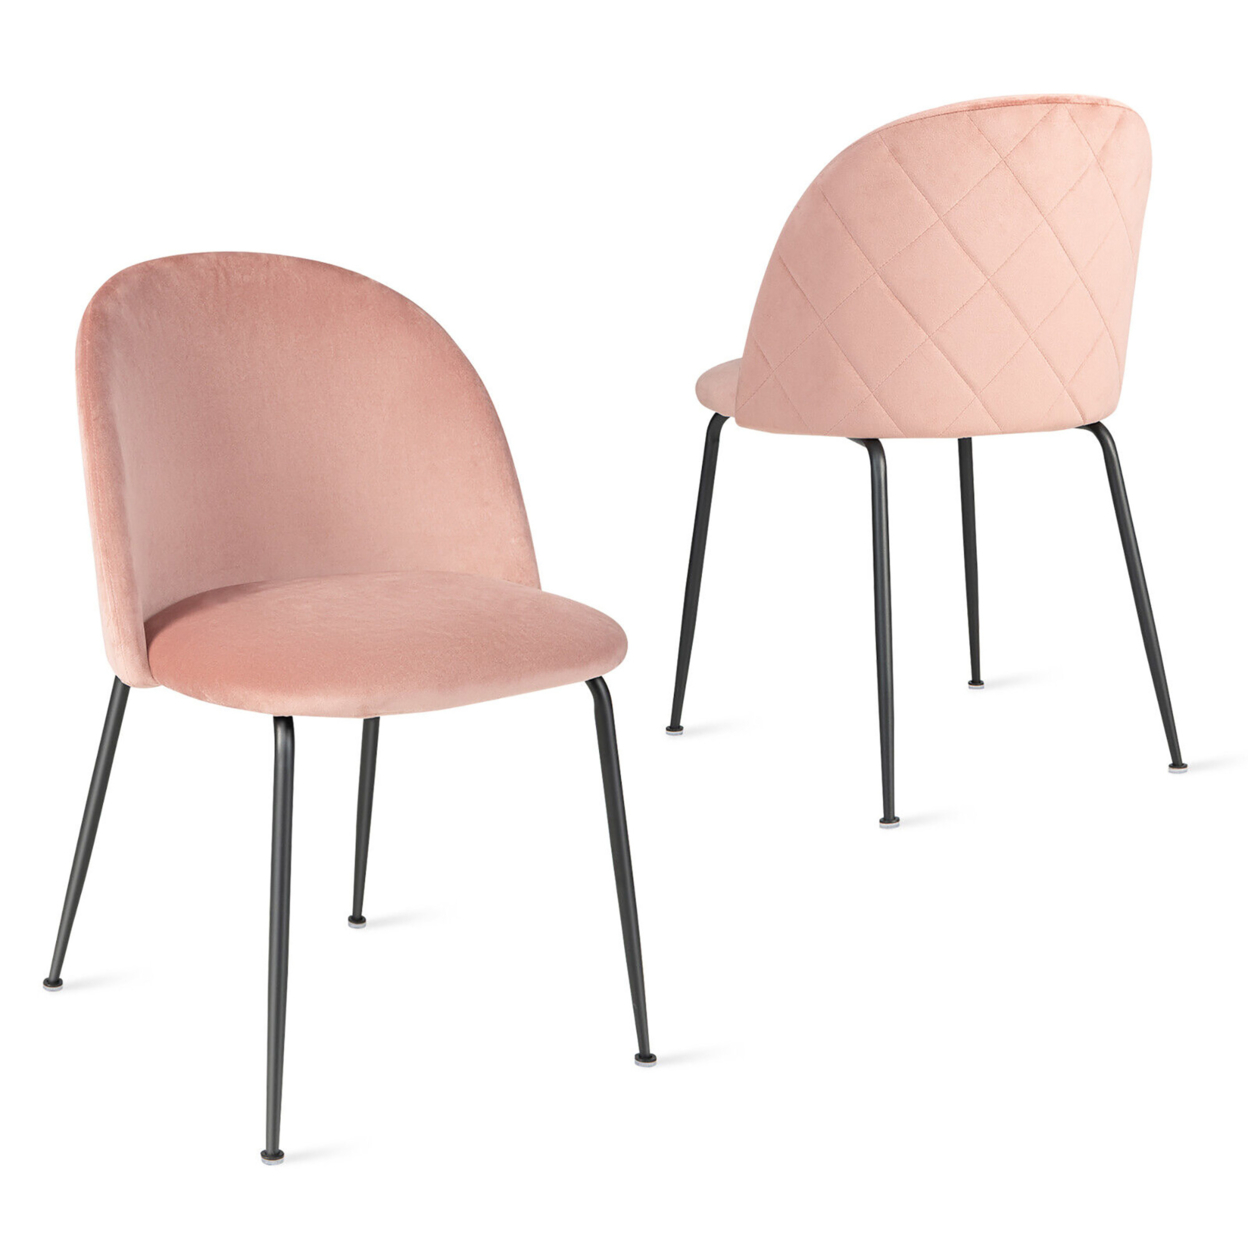 Dining Chair Set Of 2 Upholstered Velvet Chair Set W/ Metal Base For Living Room - Pink